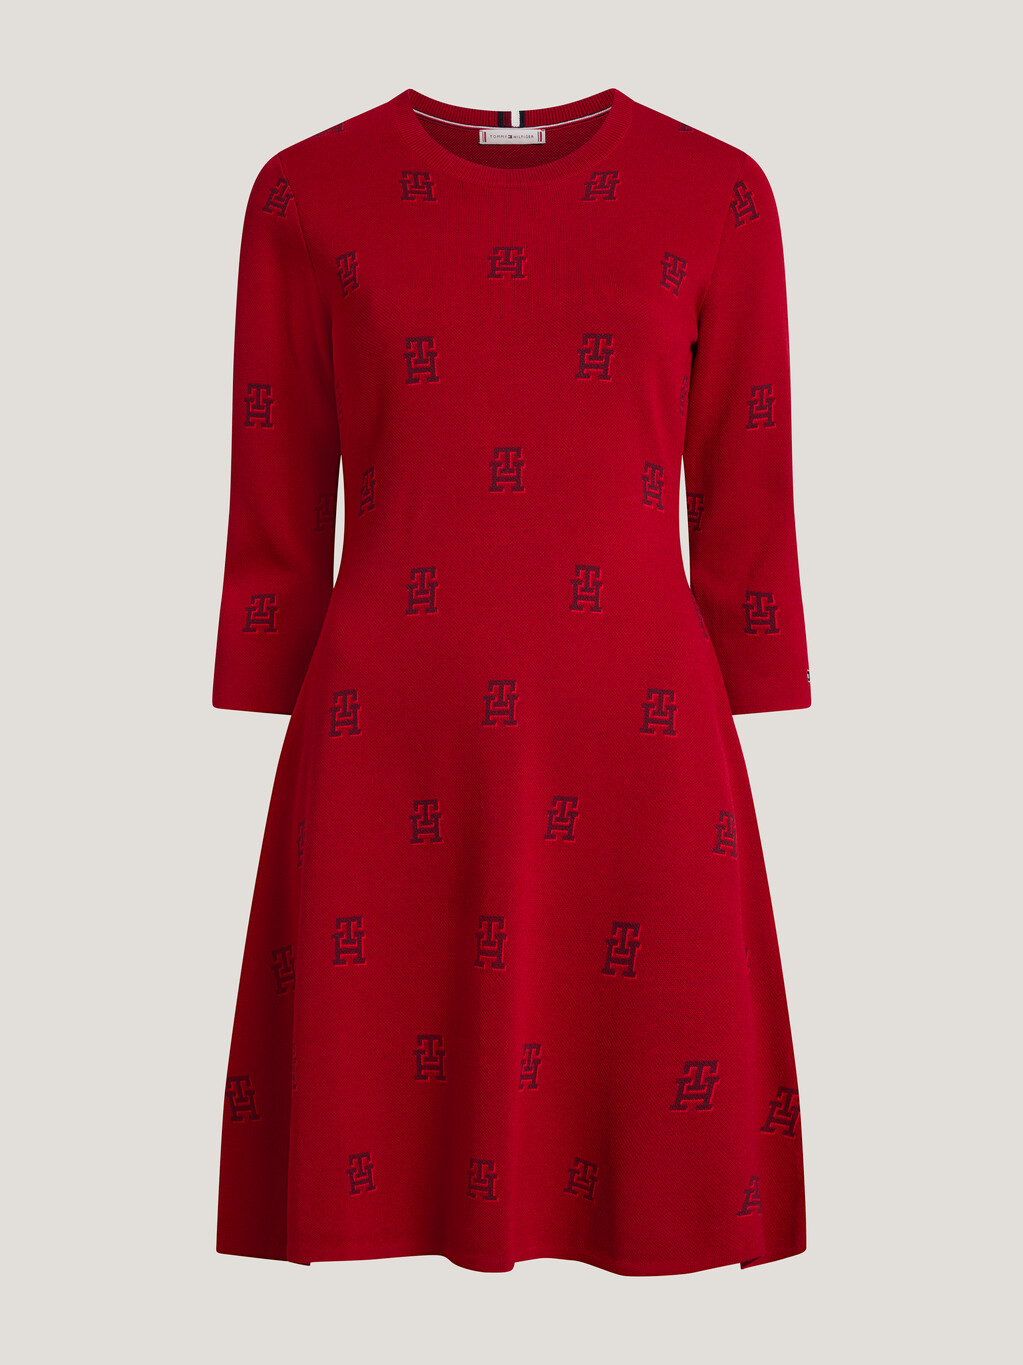 CNY TH Monogram Knit Dress, Imd Aop Arizona Red, hi-res